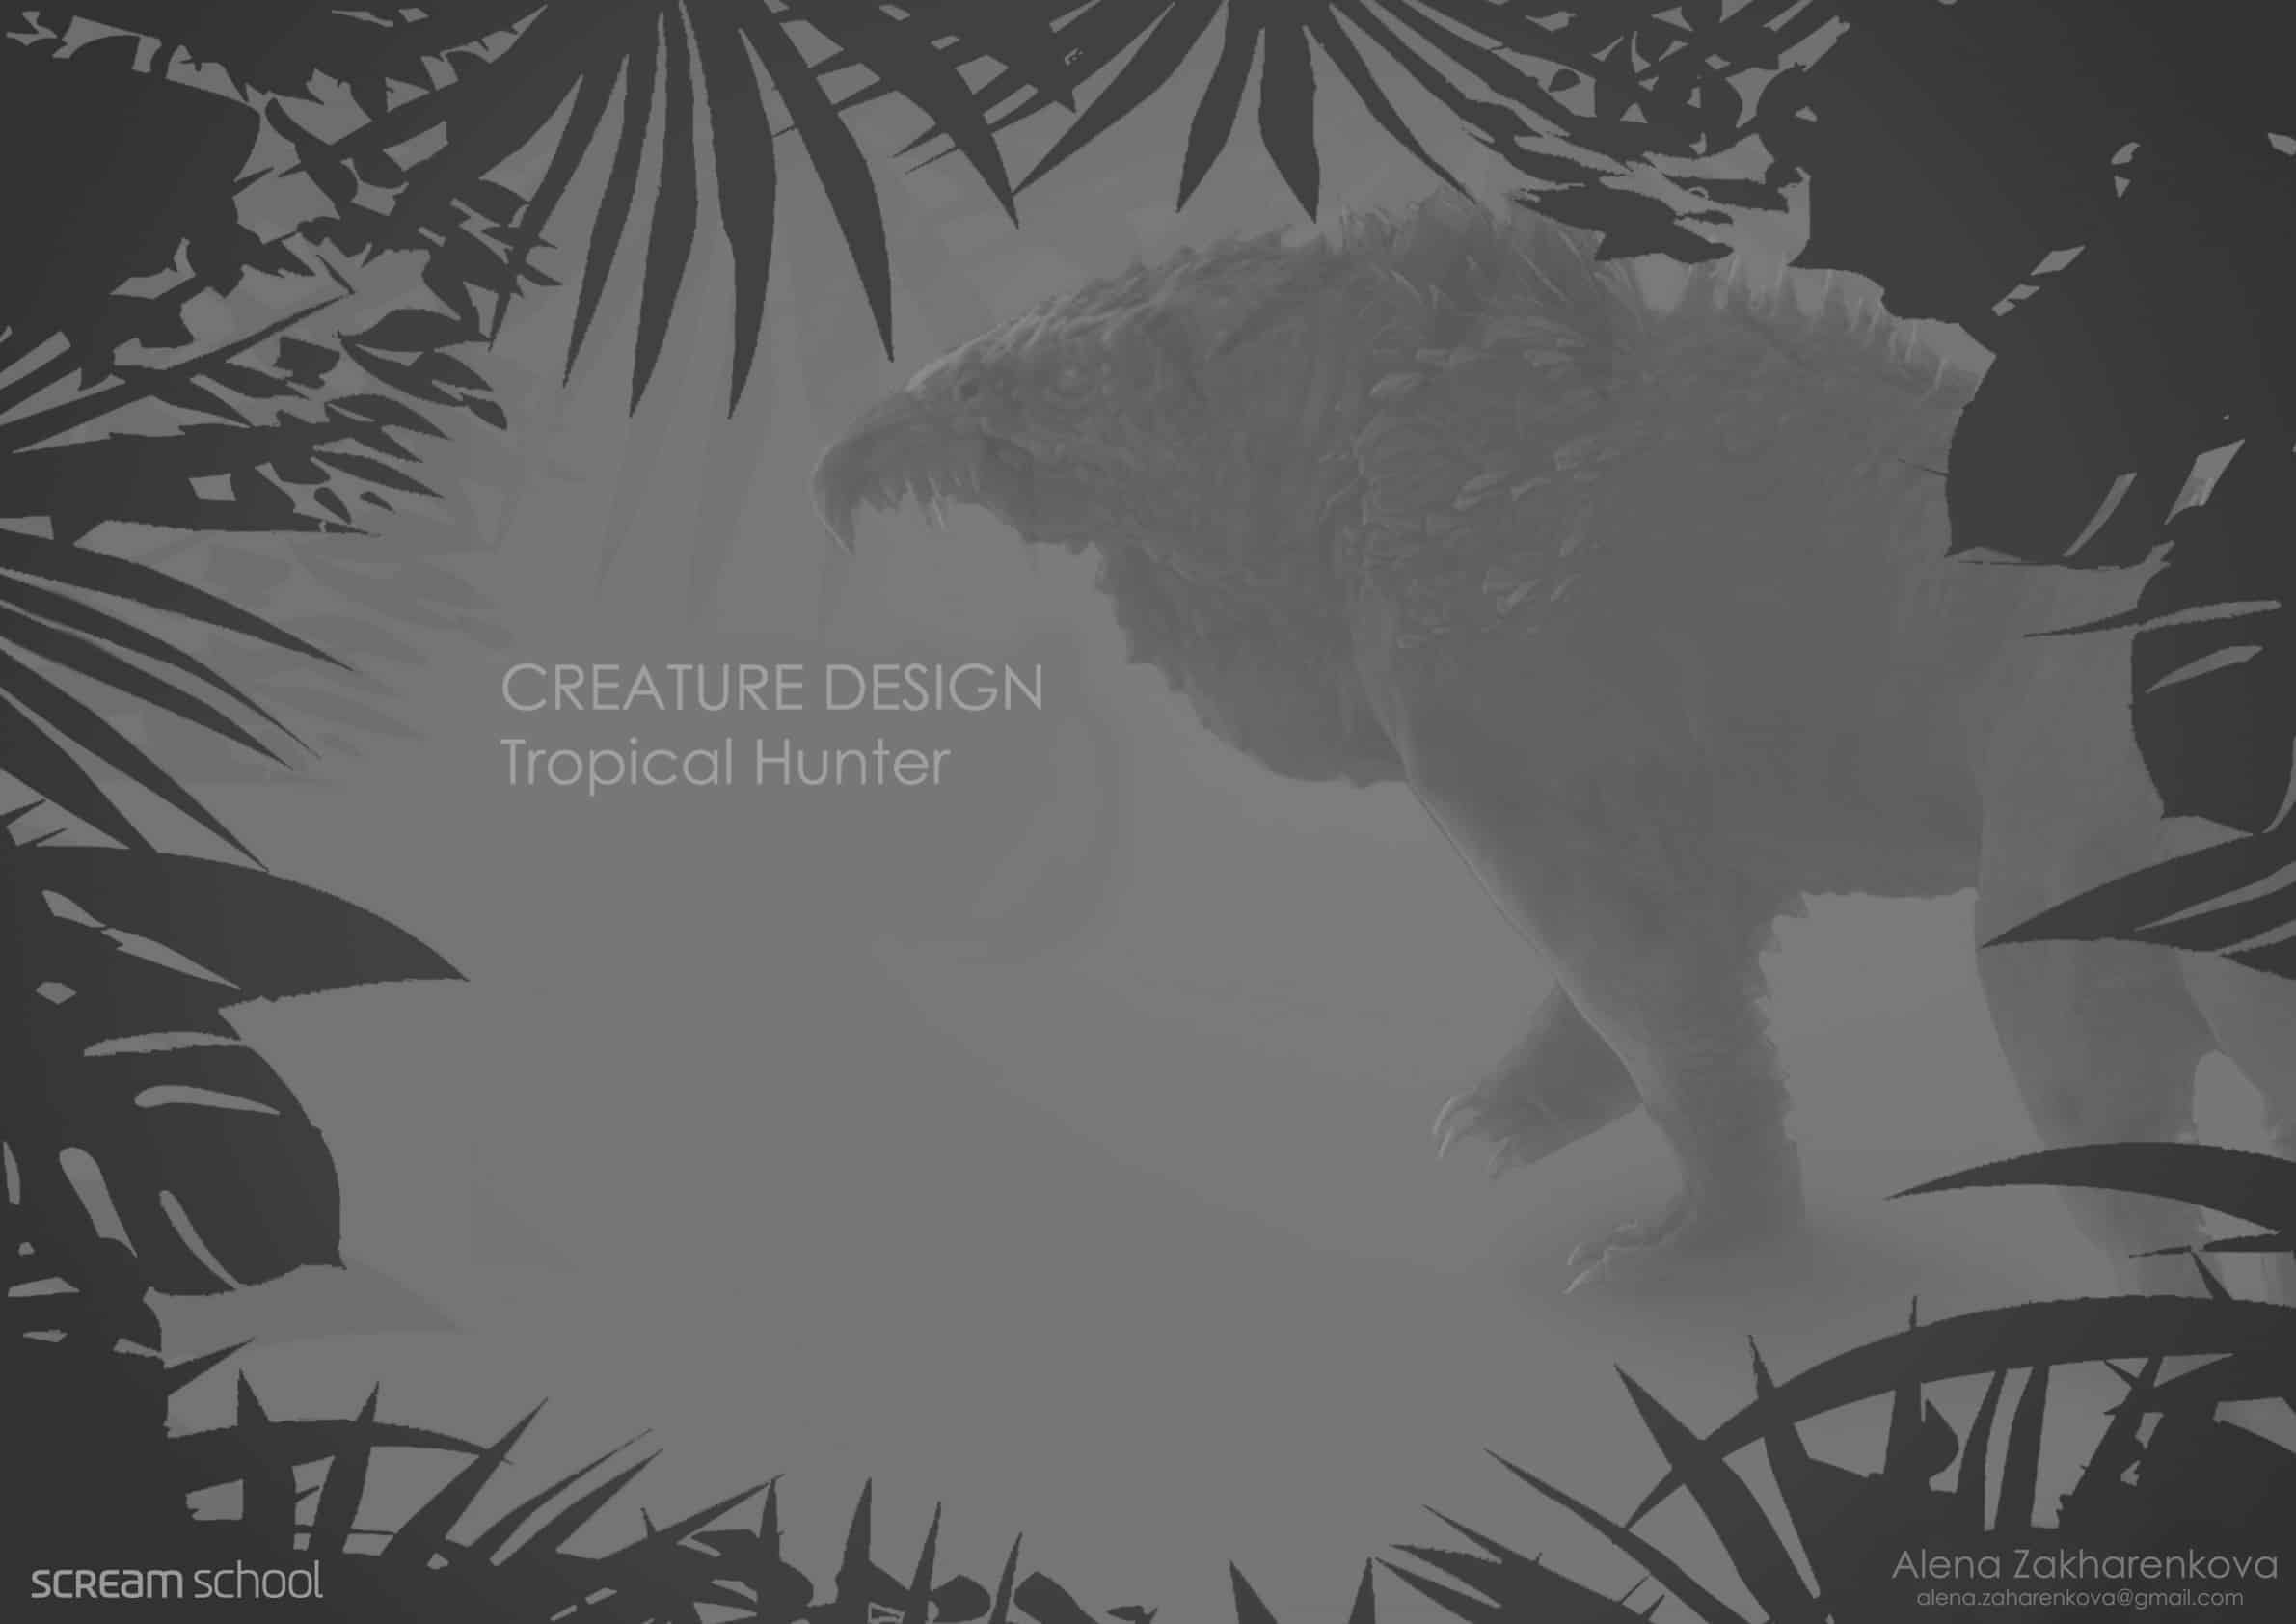 Tropical Hunter / Creature Design